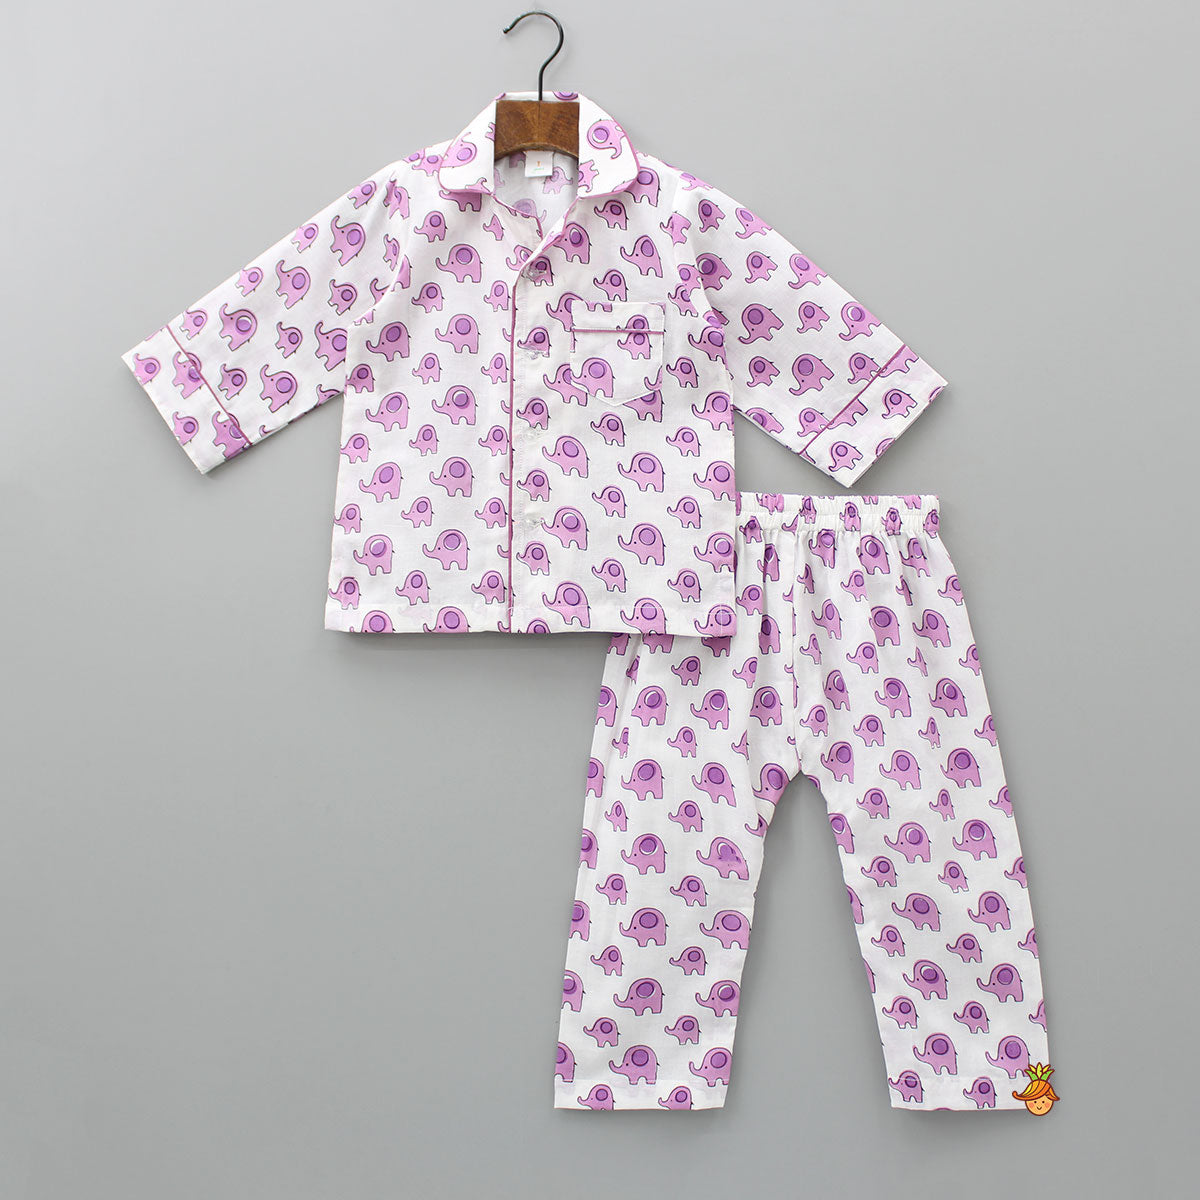 Elephant Printed Purple And White Sleepwear